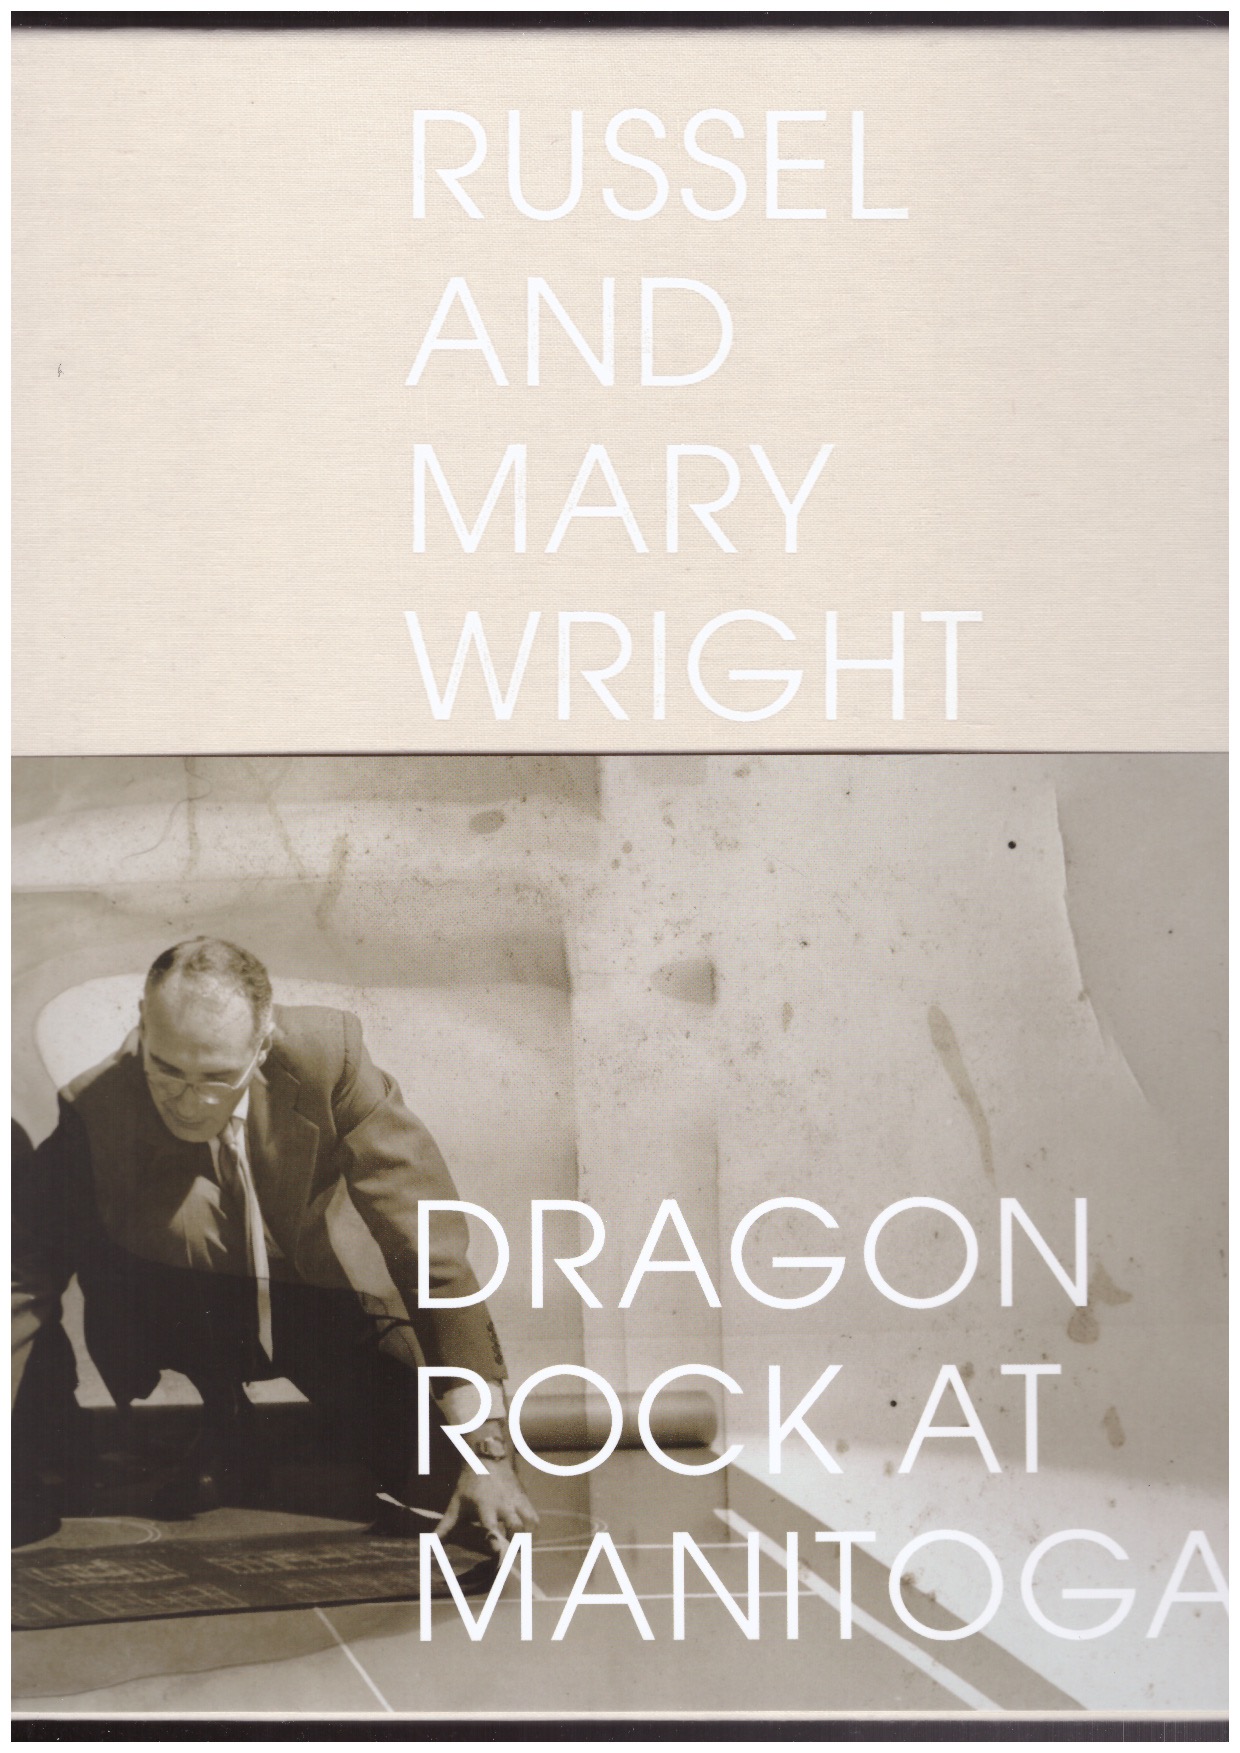 GOLUB, Jennifer (ed.) - Russel and Mary Wright: Dragon Rock at Manitoga